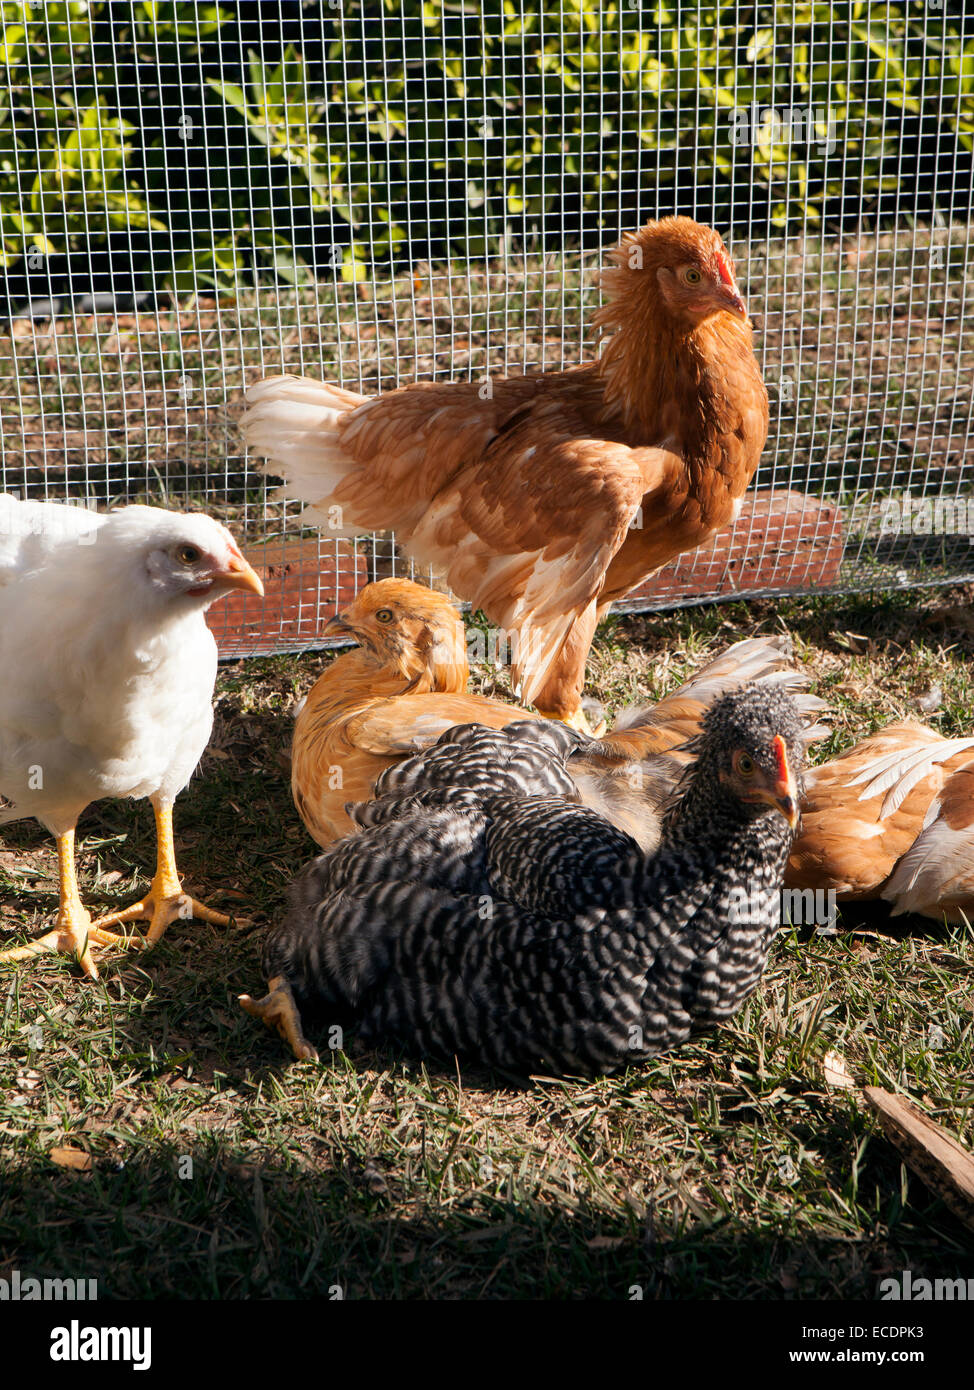 Backyard chickens sunbathing in a poultry run. Stock Photo